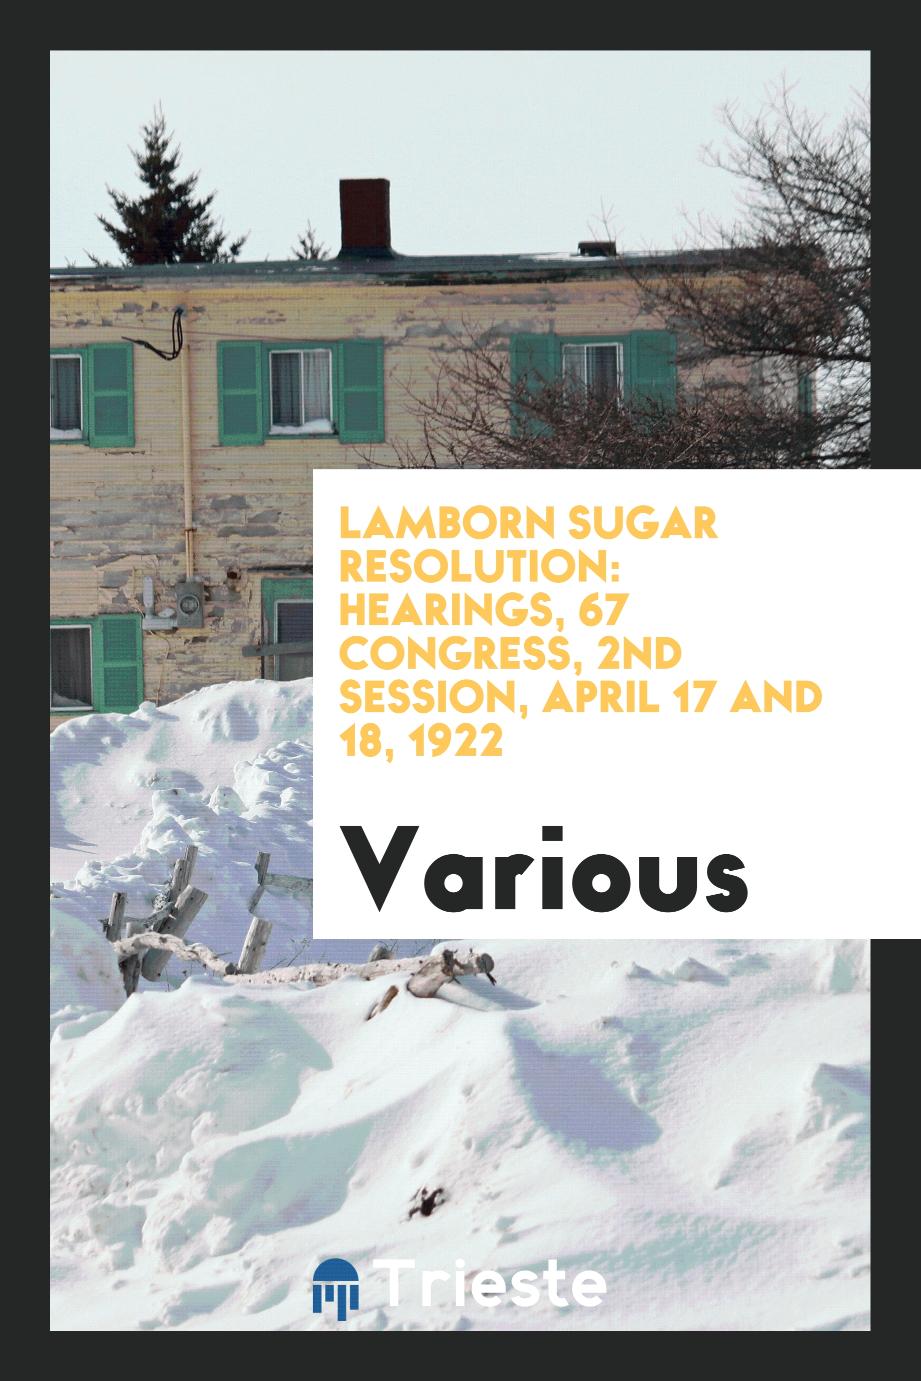 Lamborn Sugar Resolution: Hearings, 67 Congress, 2nd Session, April 17 and 18, 1922